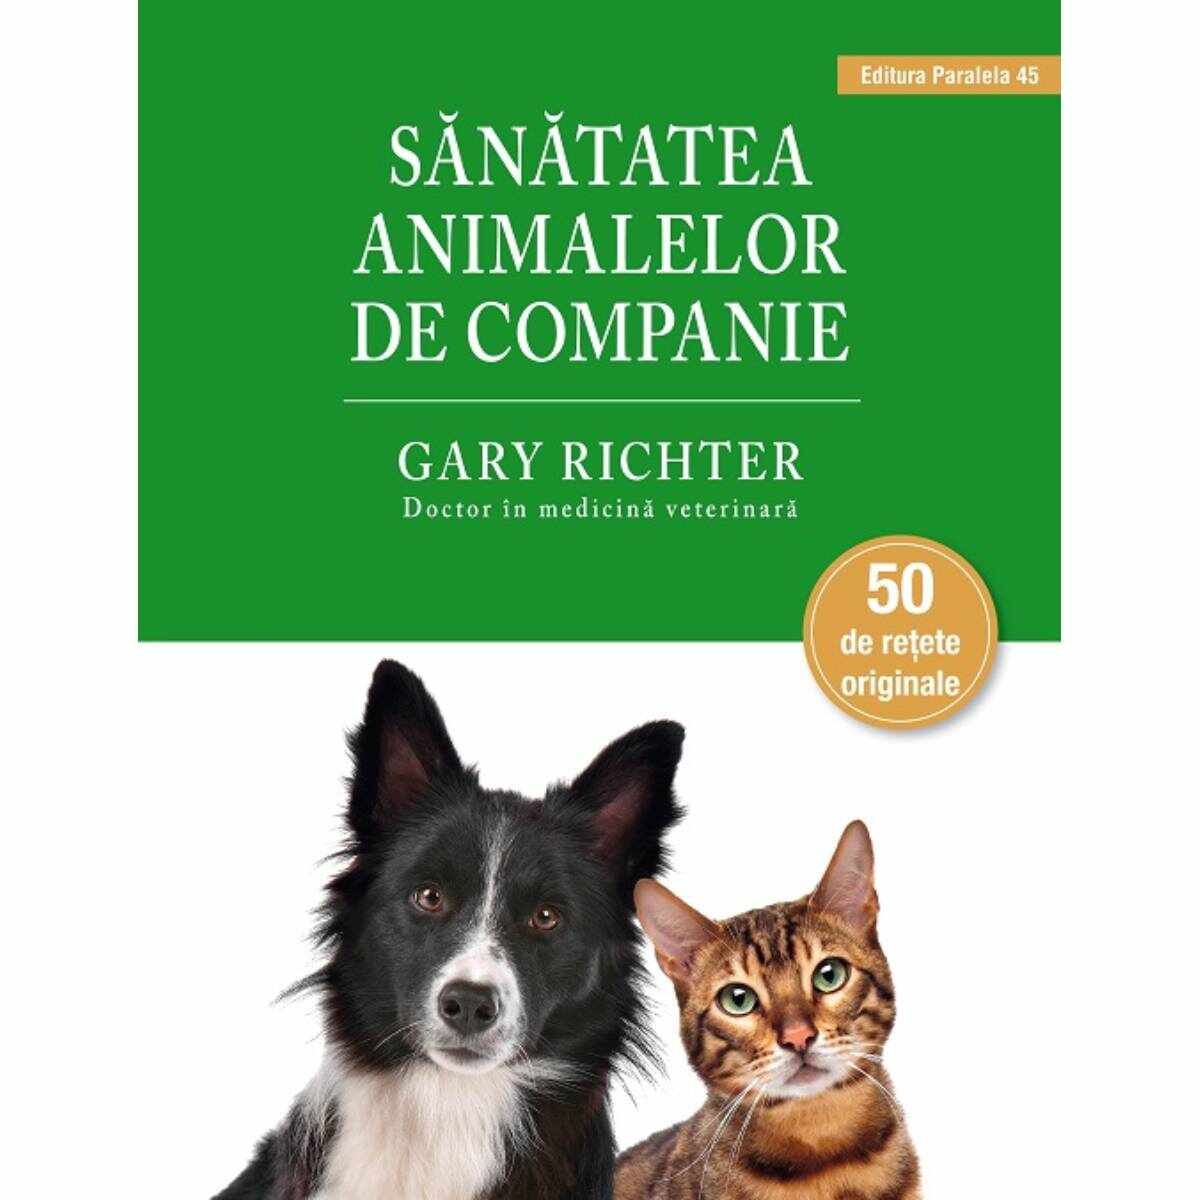 Sanatatea animalelor de companie, Dr. Gary Richter